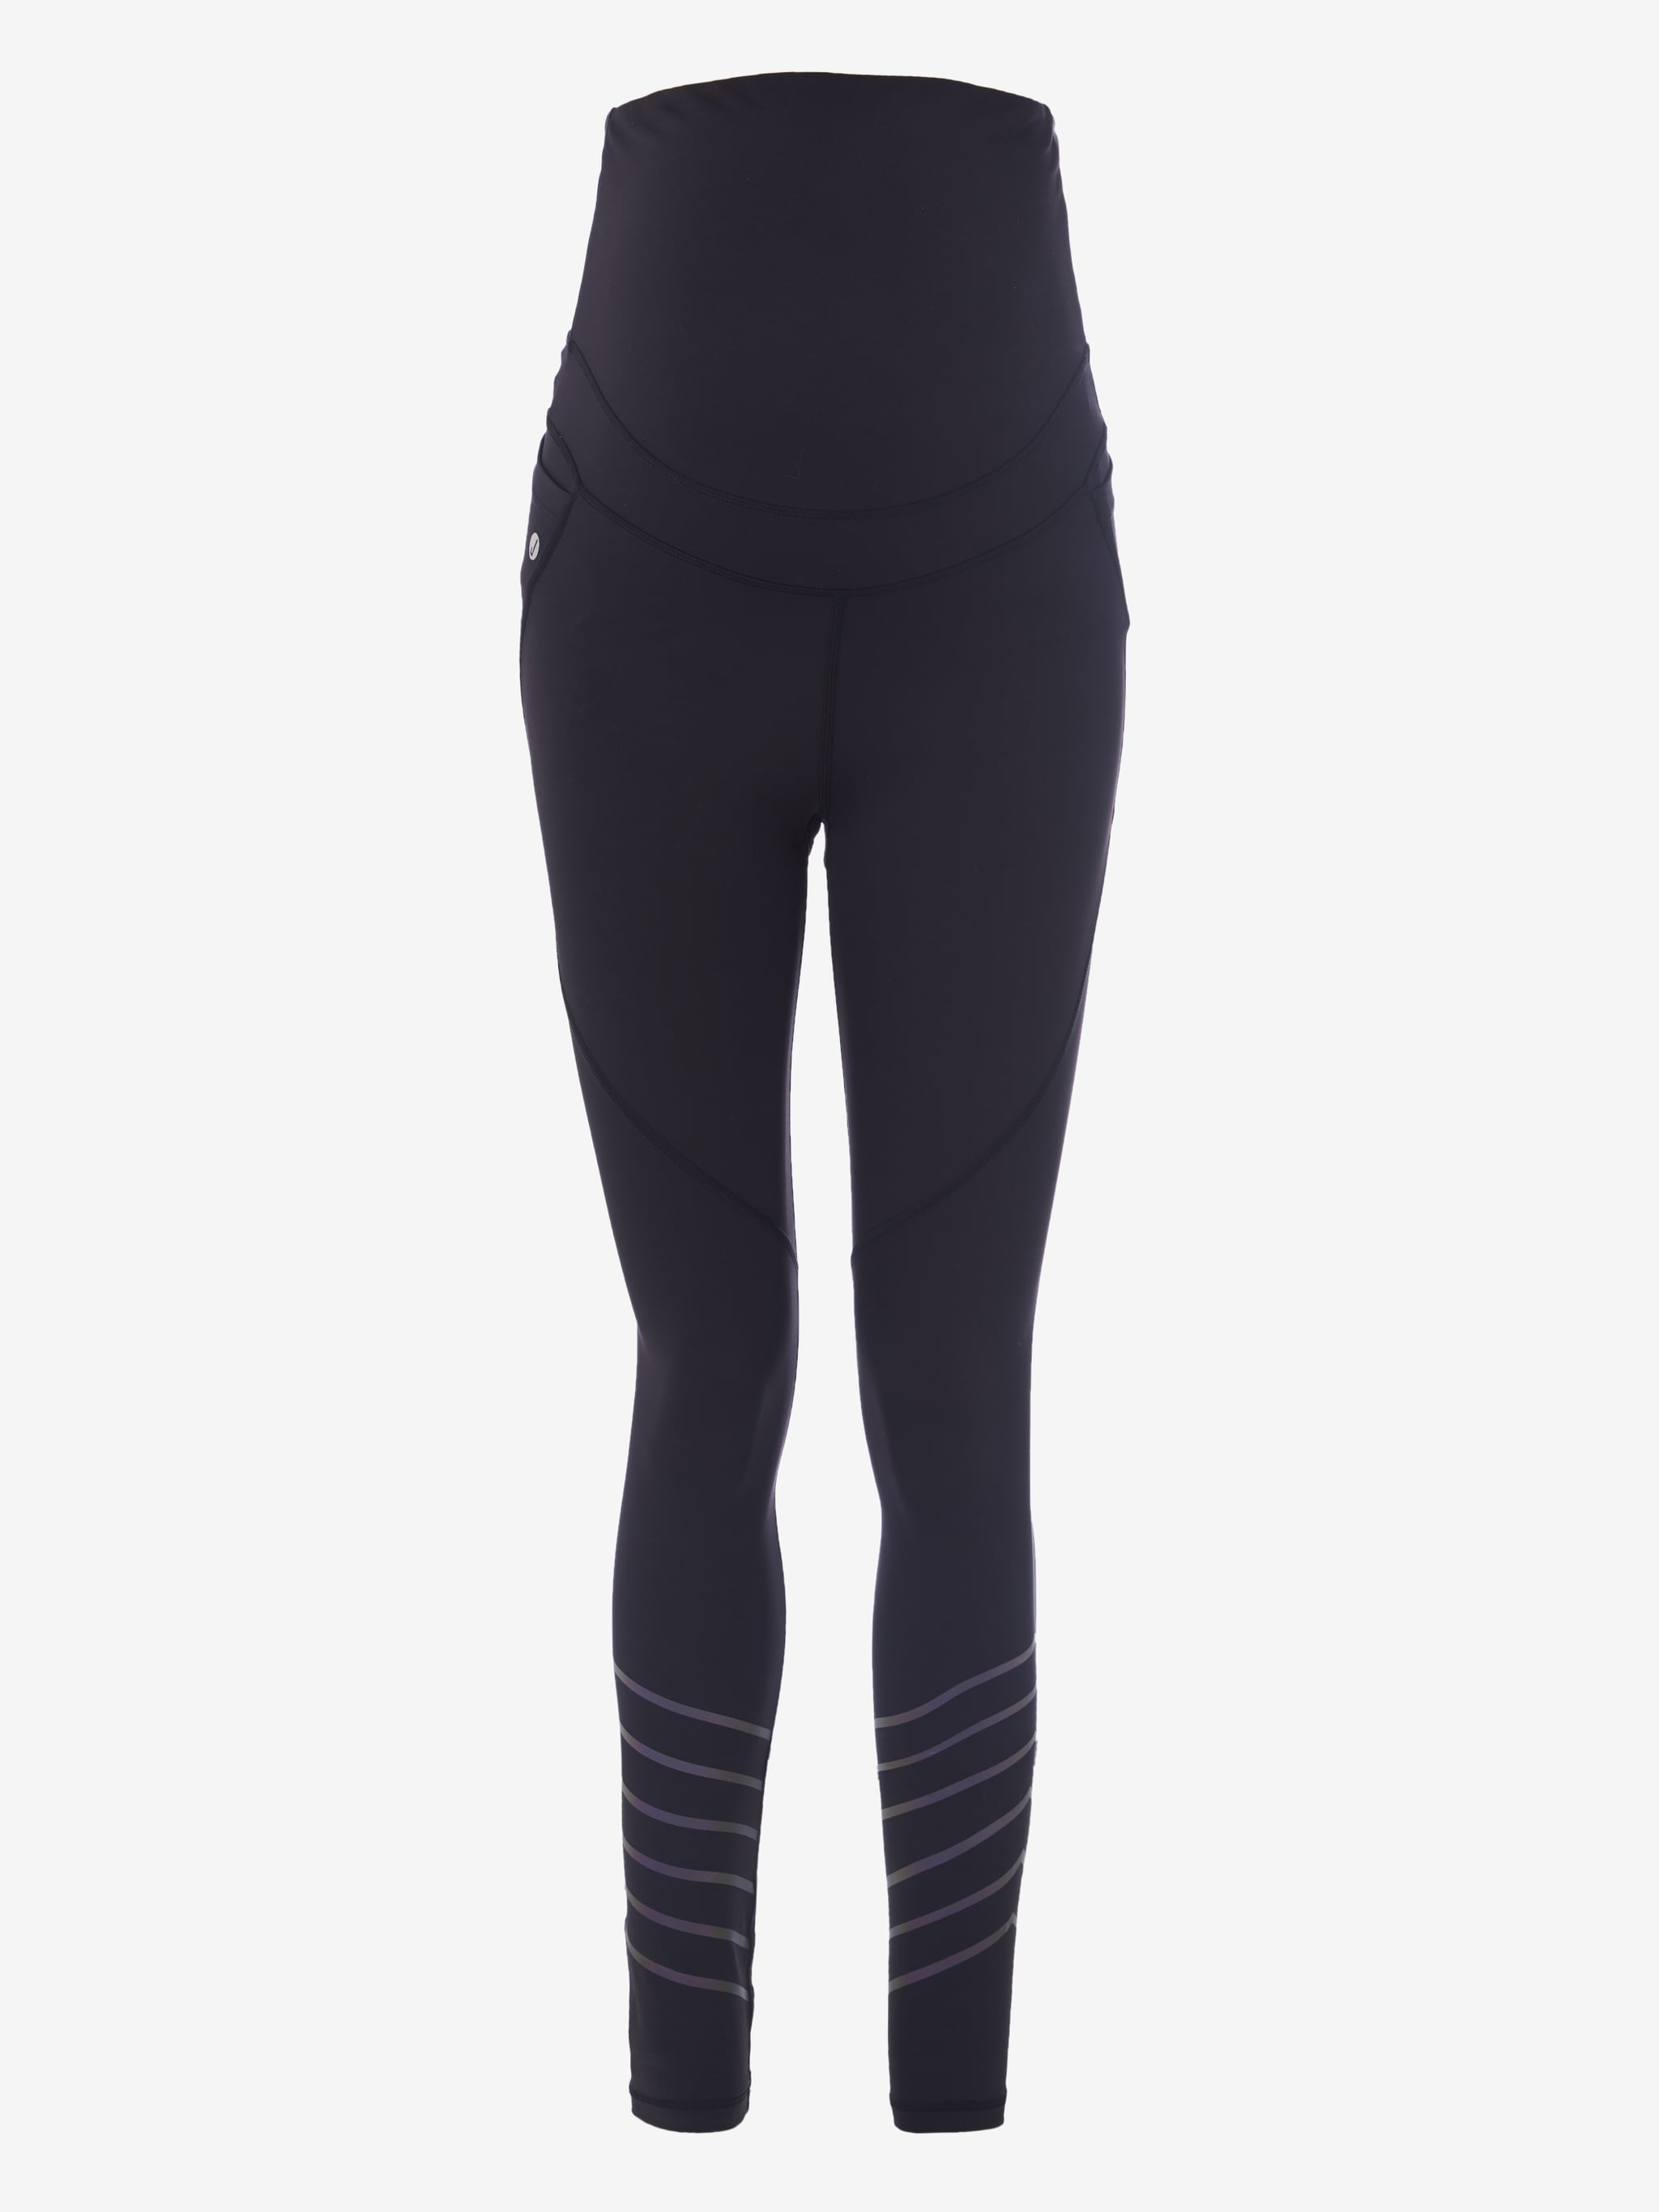 TLF Electra 7/8 Leggings | Tlf apparel, Squat proof leggings, Women